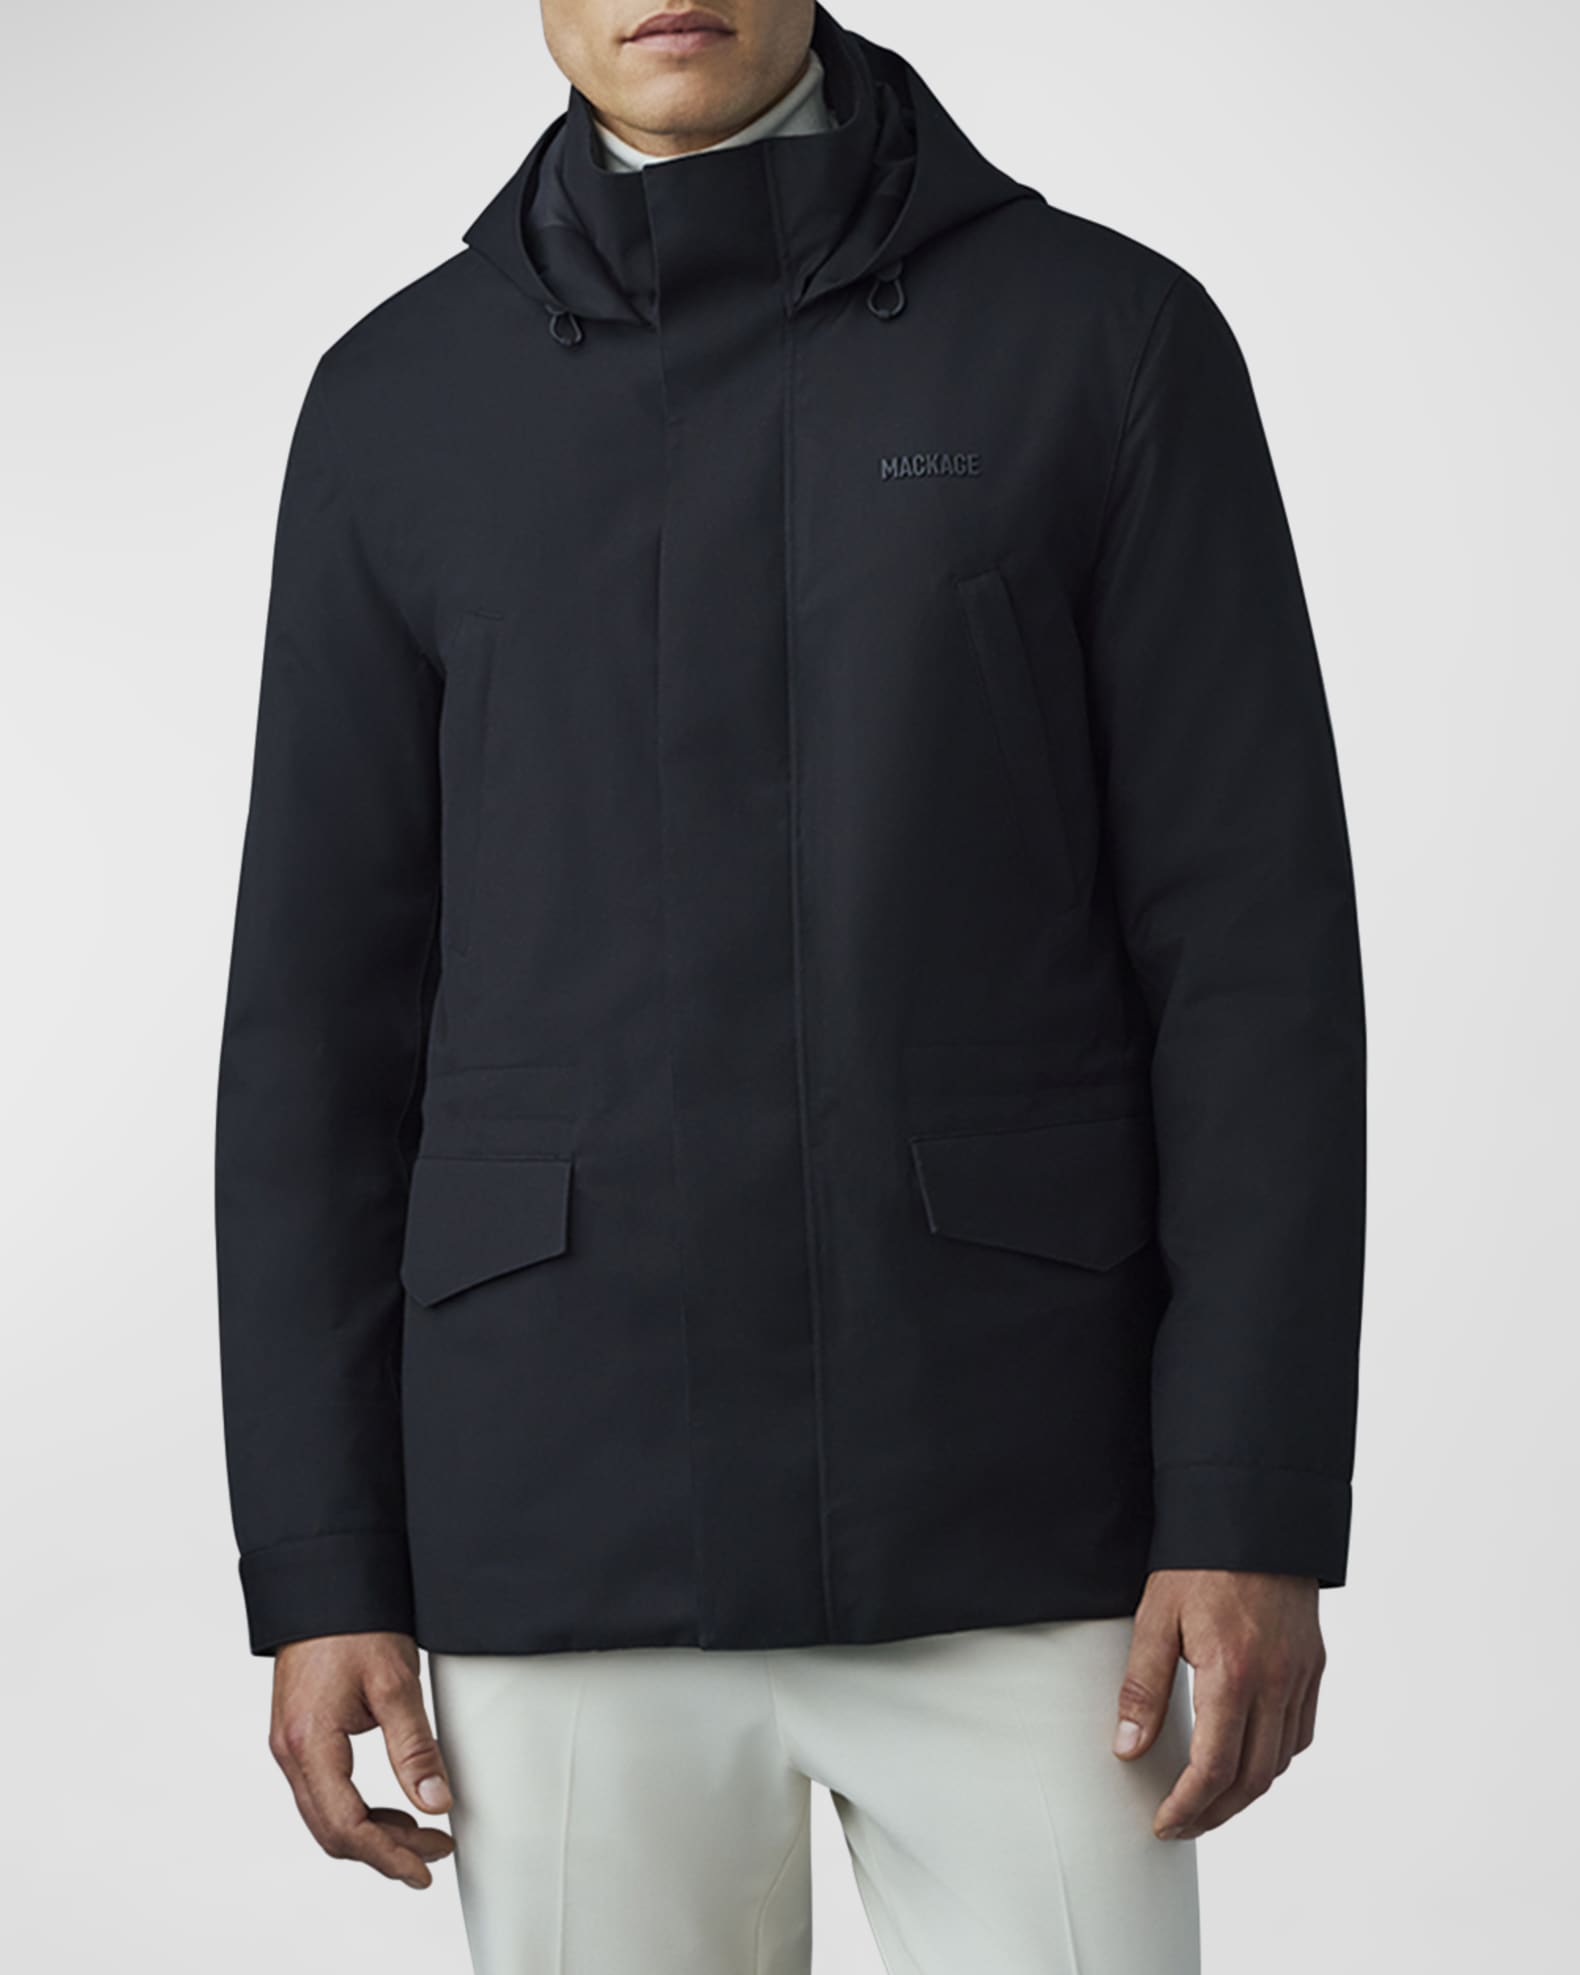 Neiman Marcus Mens Winter Coats Online | bellvalefarms.com